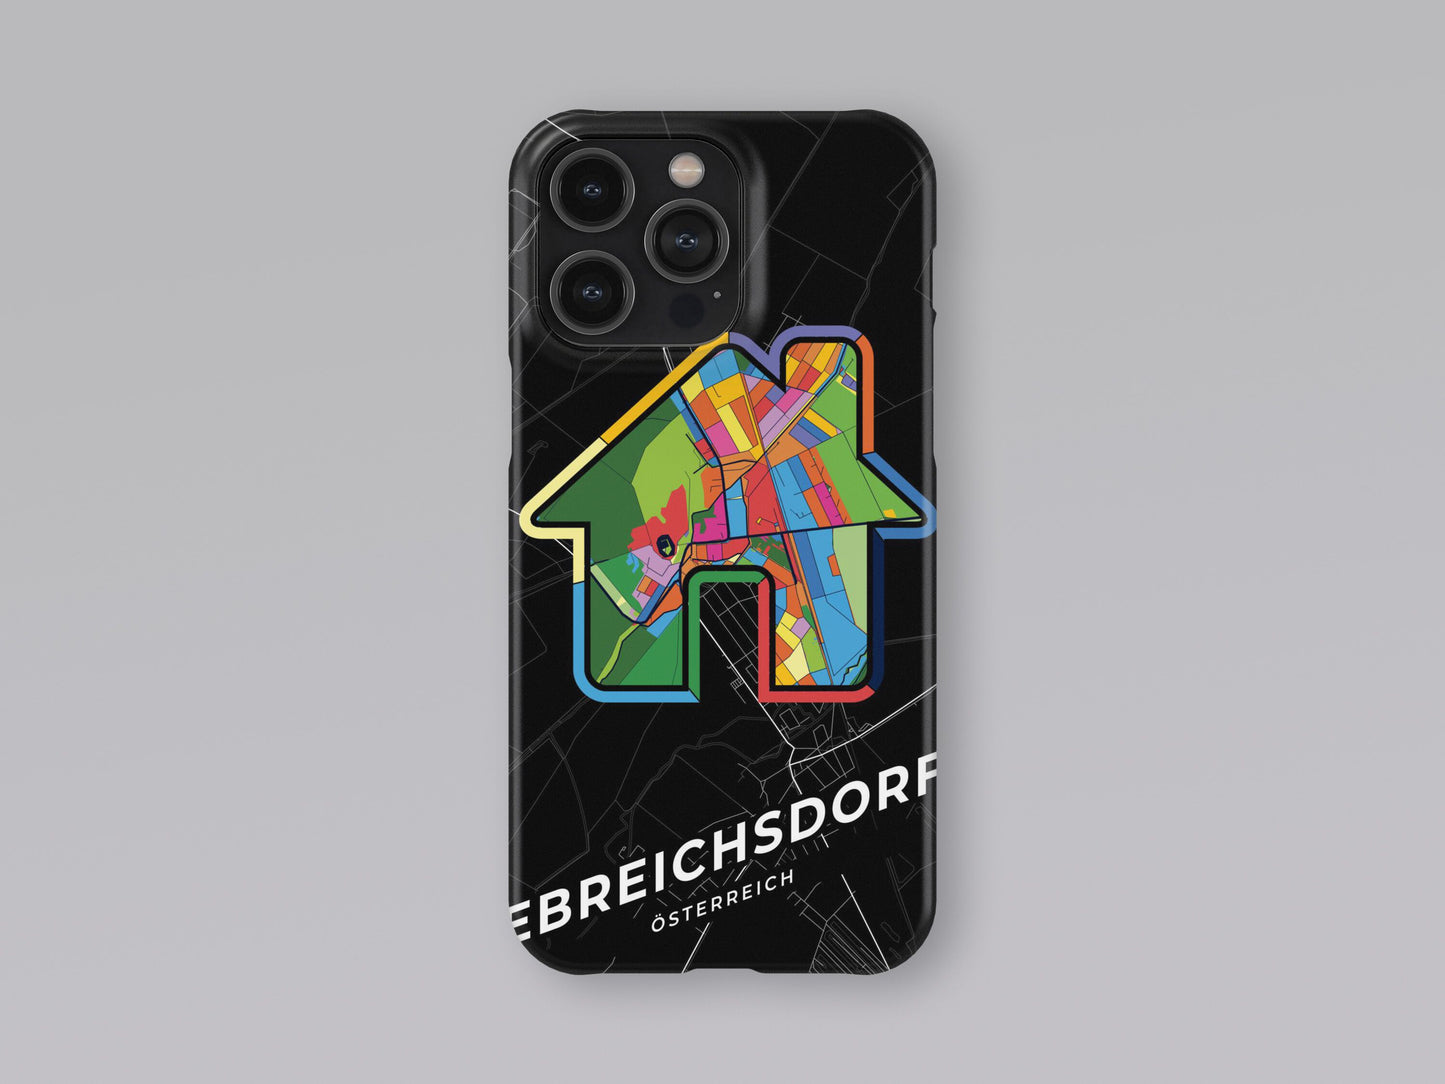 Ebreichsdorf Österreich slim phone case with colorful icon. Birthday, wedding or housewarming gift. Couple match cases. 3